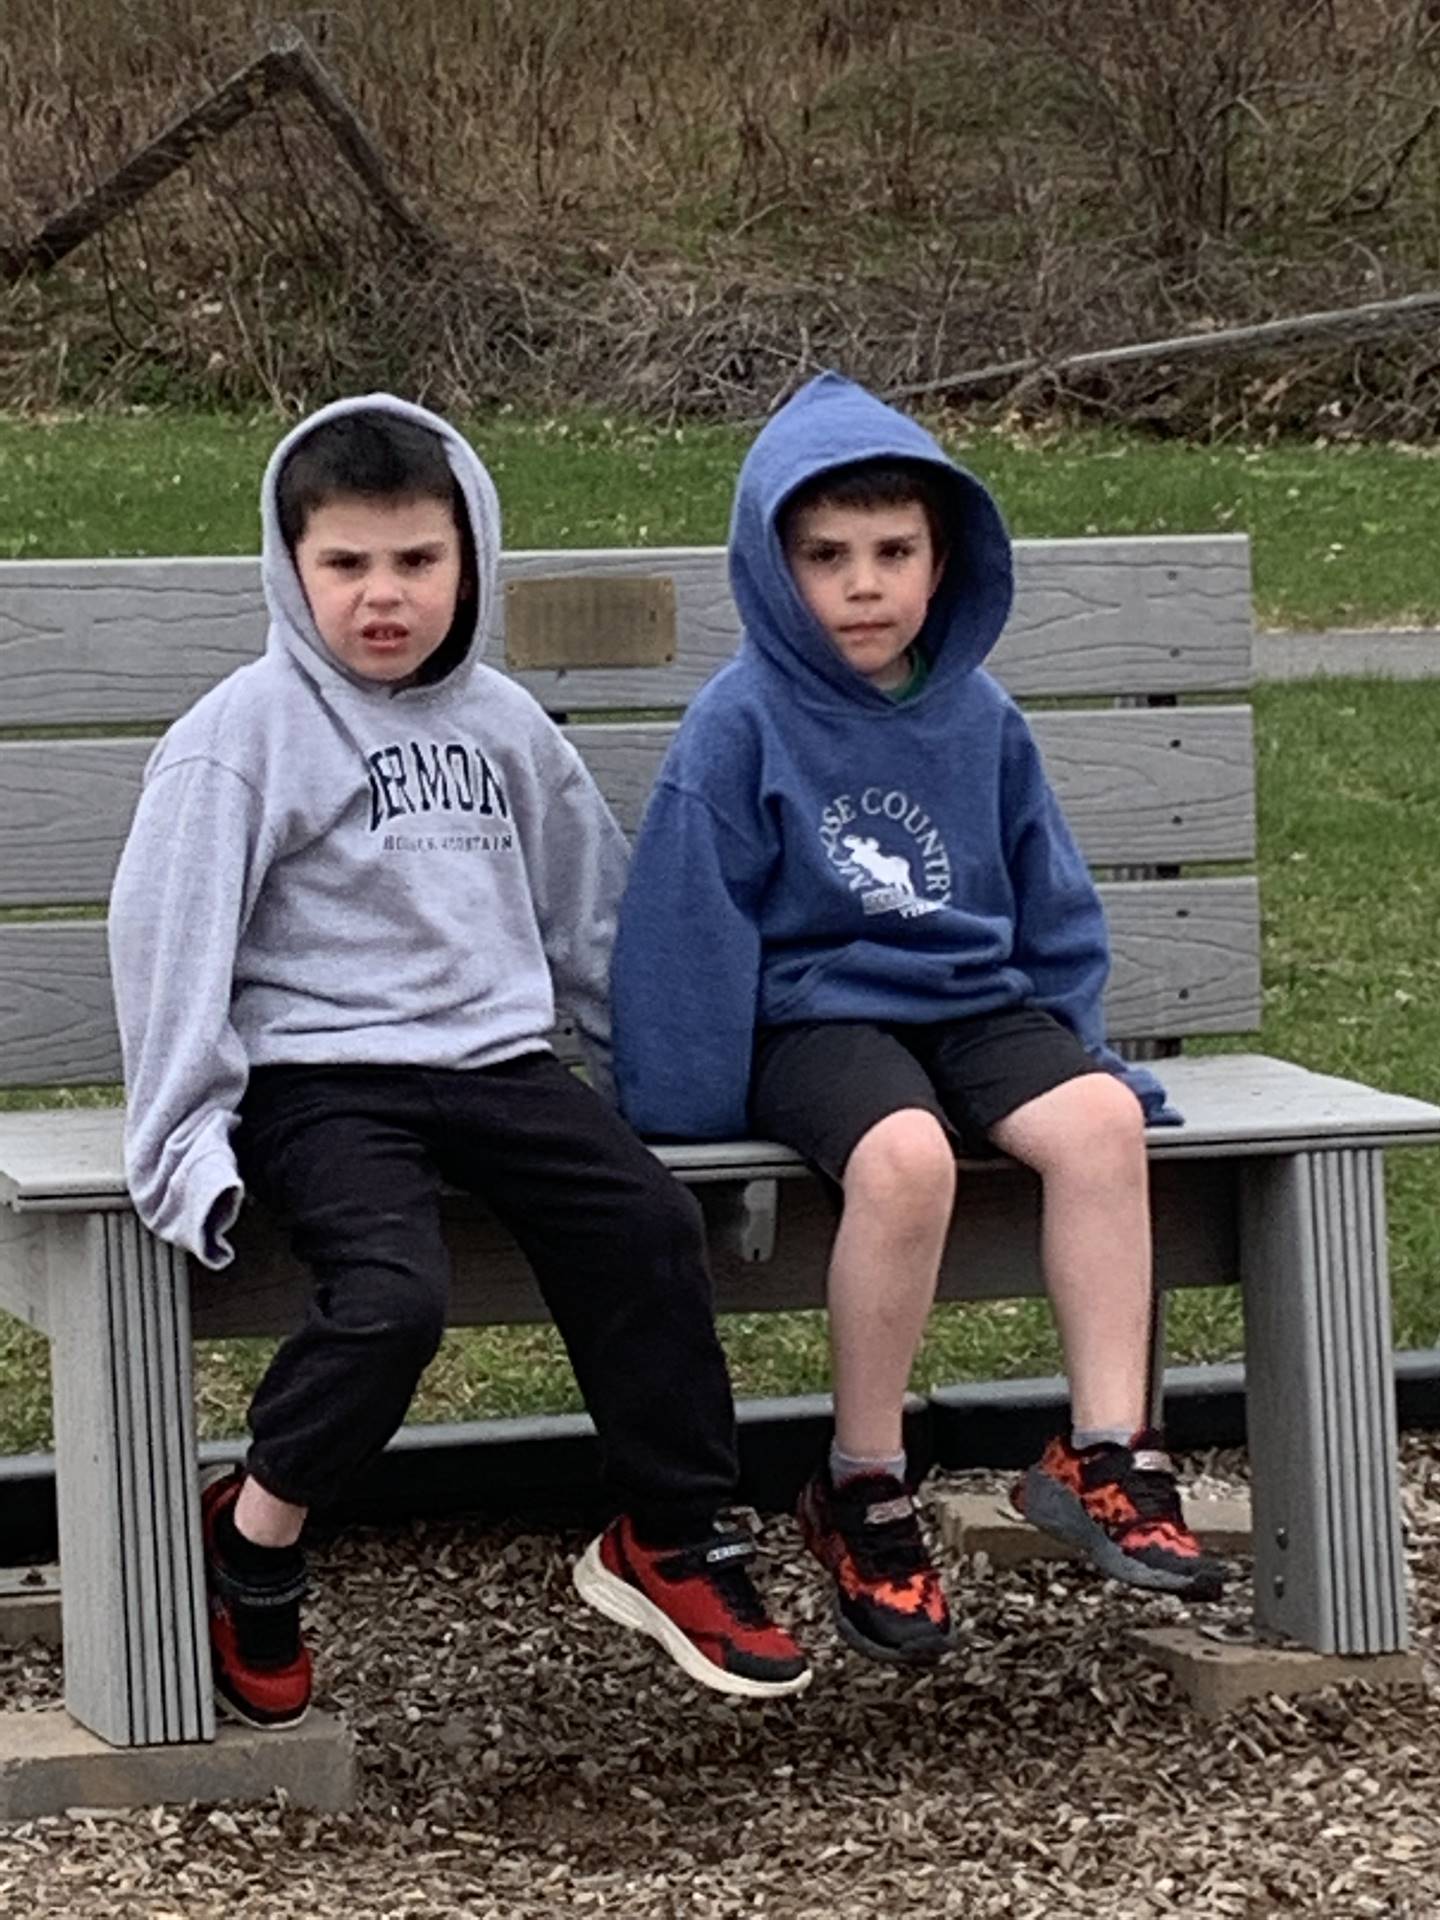 2 children sitting on a buddy bench